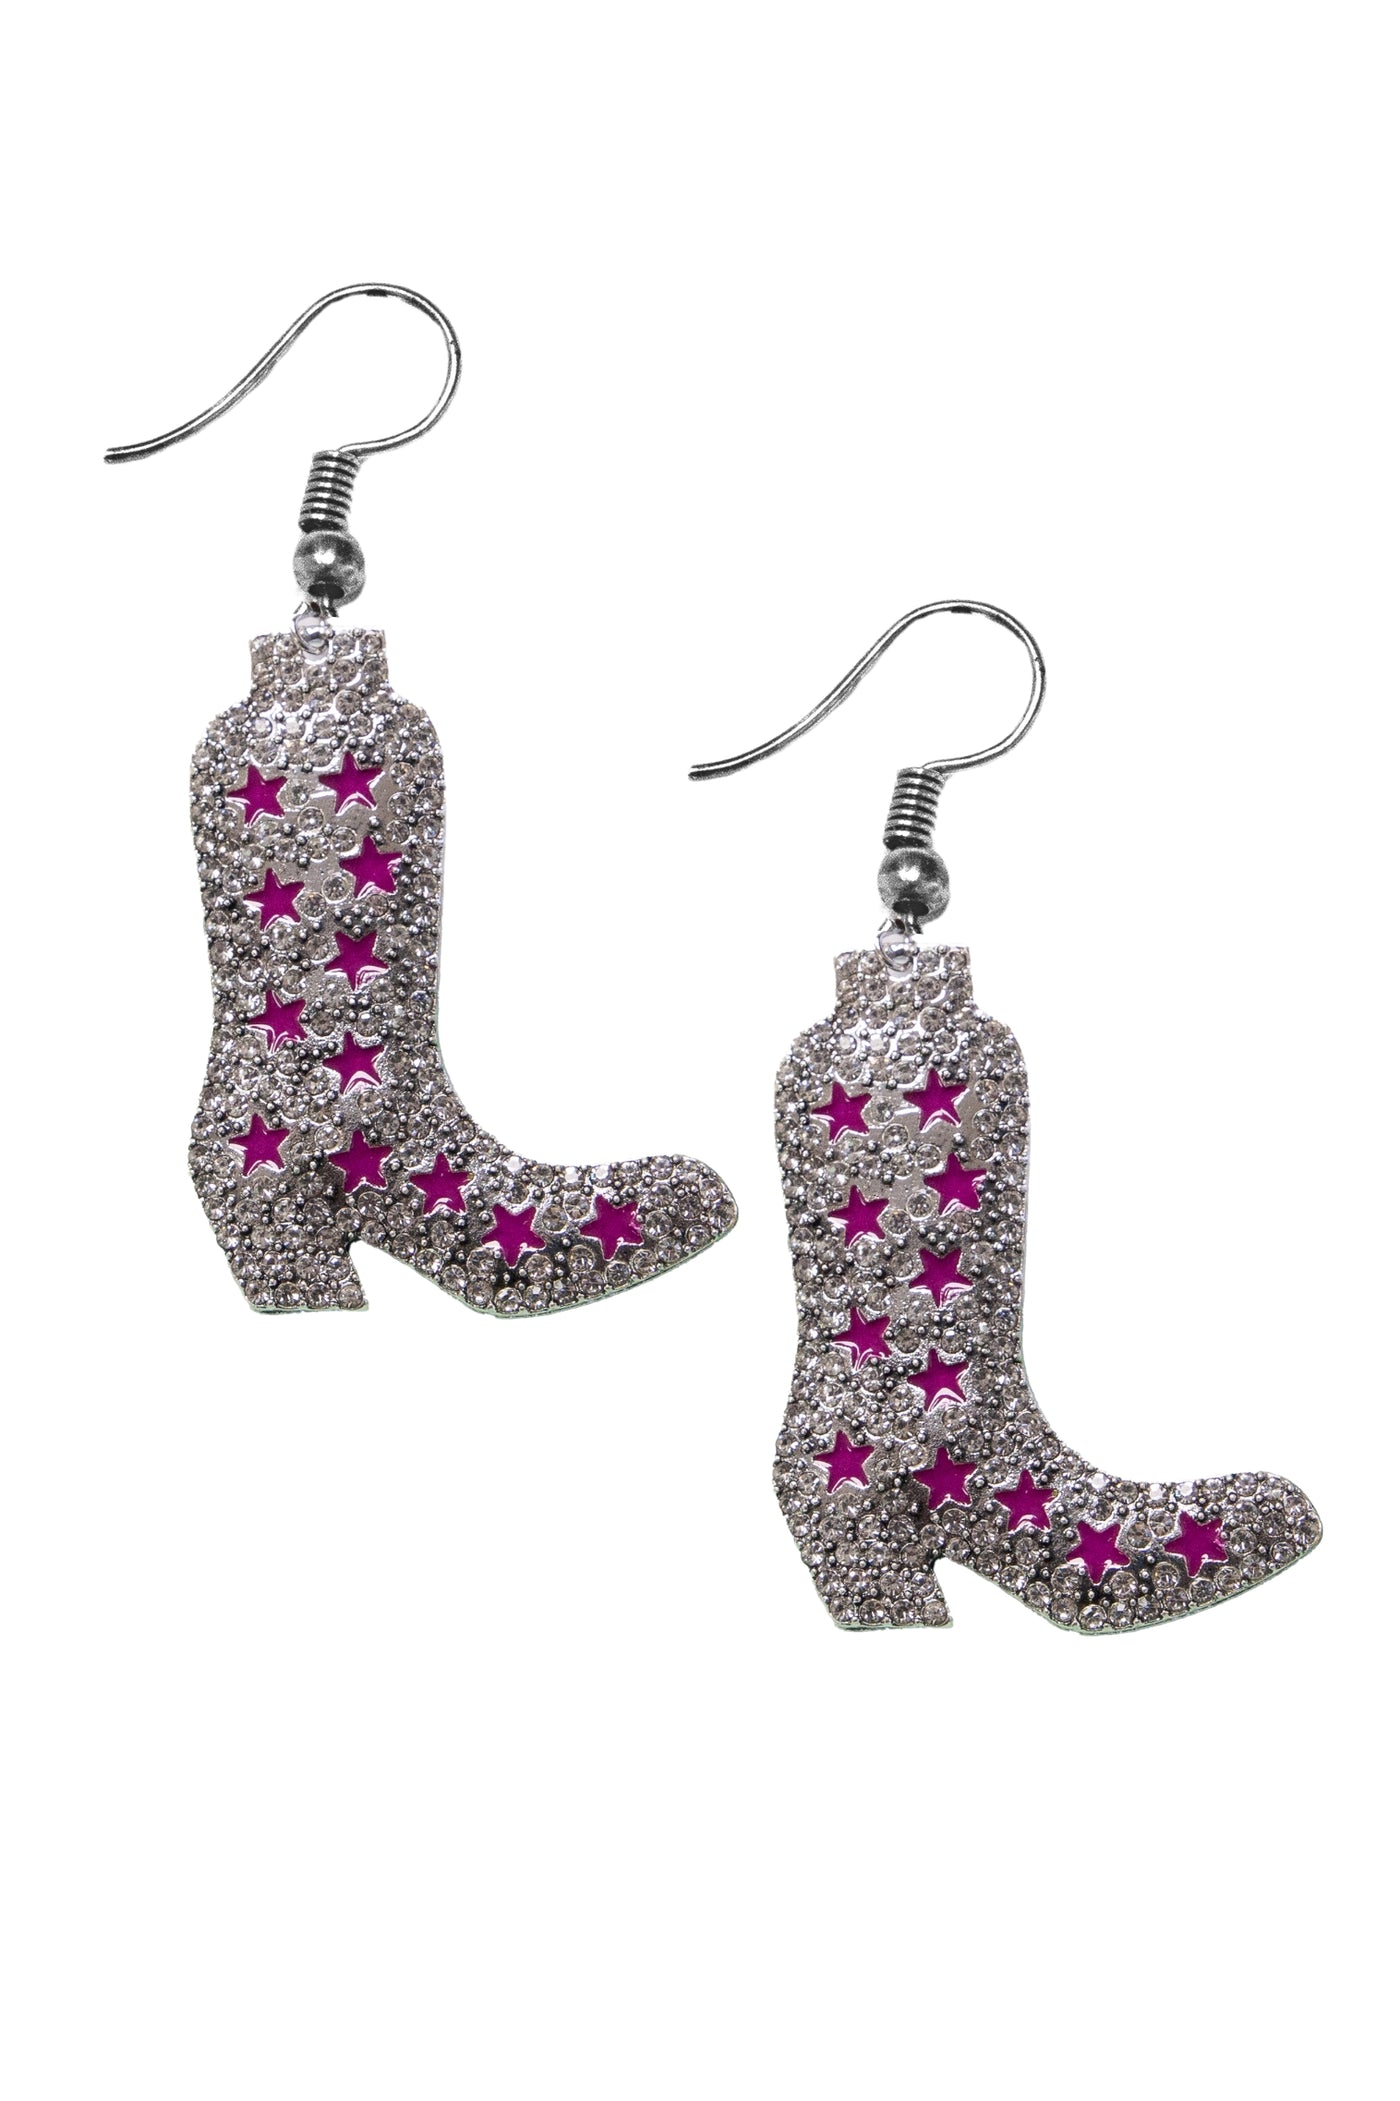 Rhinestone Pink Cowboy Boot Earrings